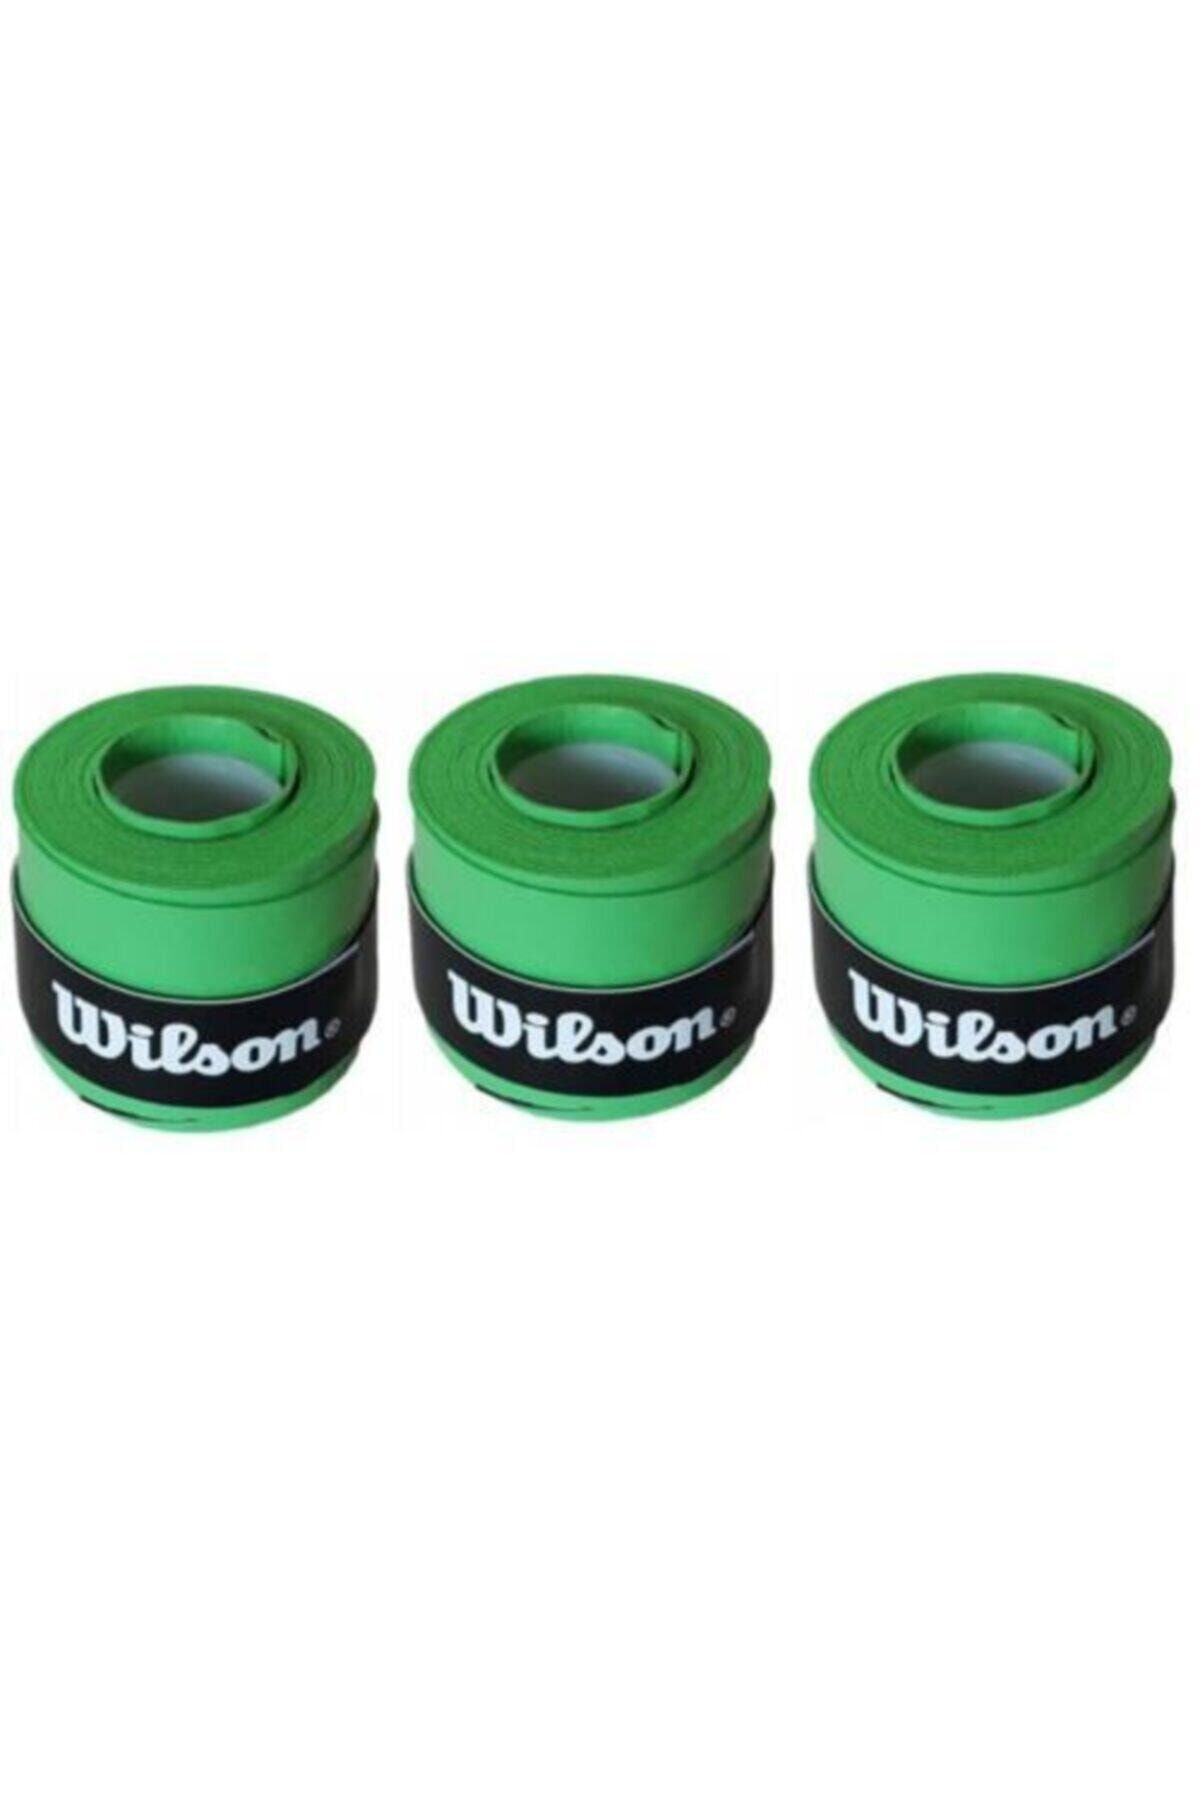 Wilson 3 Adet Comfort Bowl O'grips Tekli Yeşil Grip